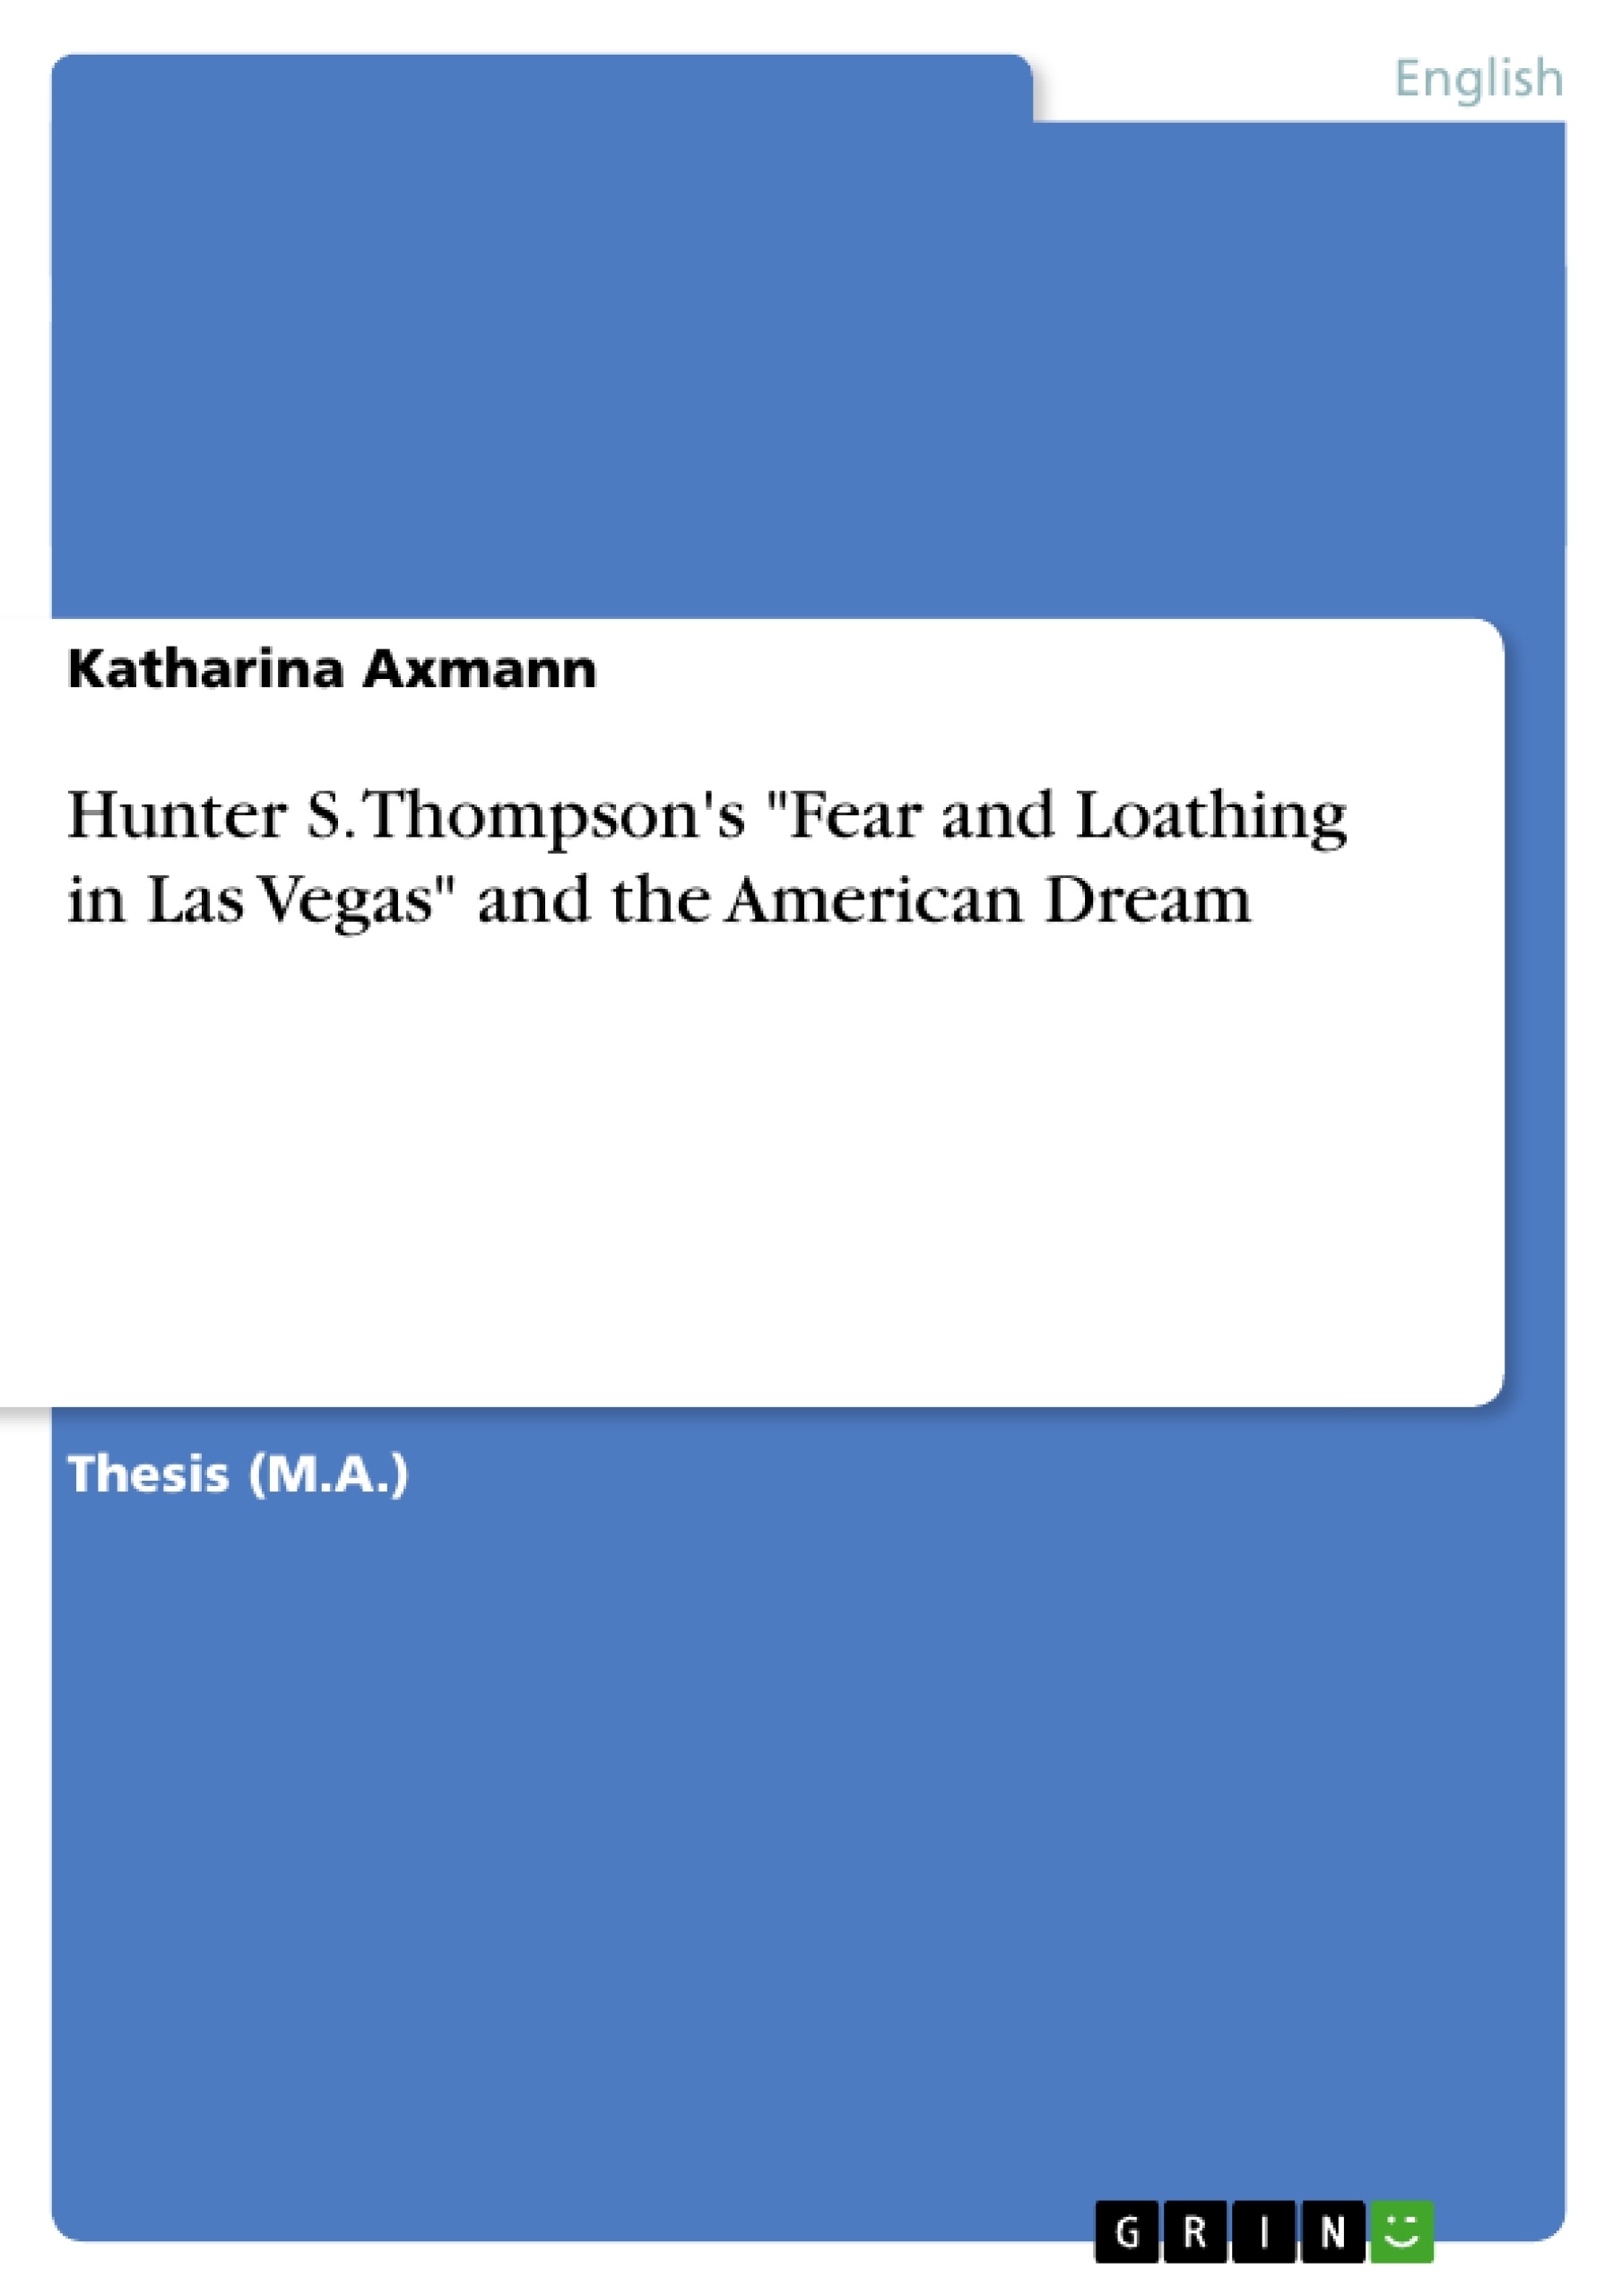 Great gatsby essay thesis american dream